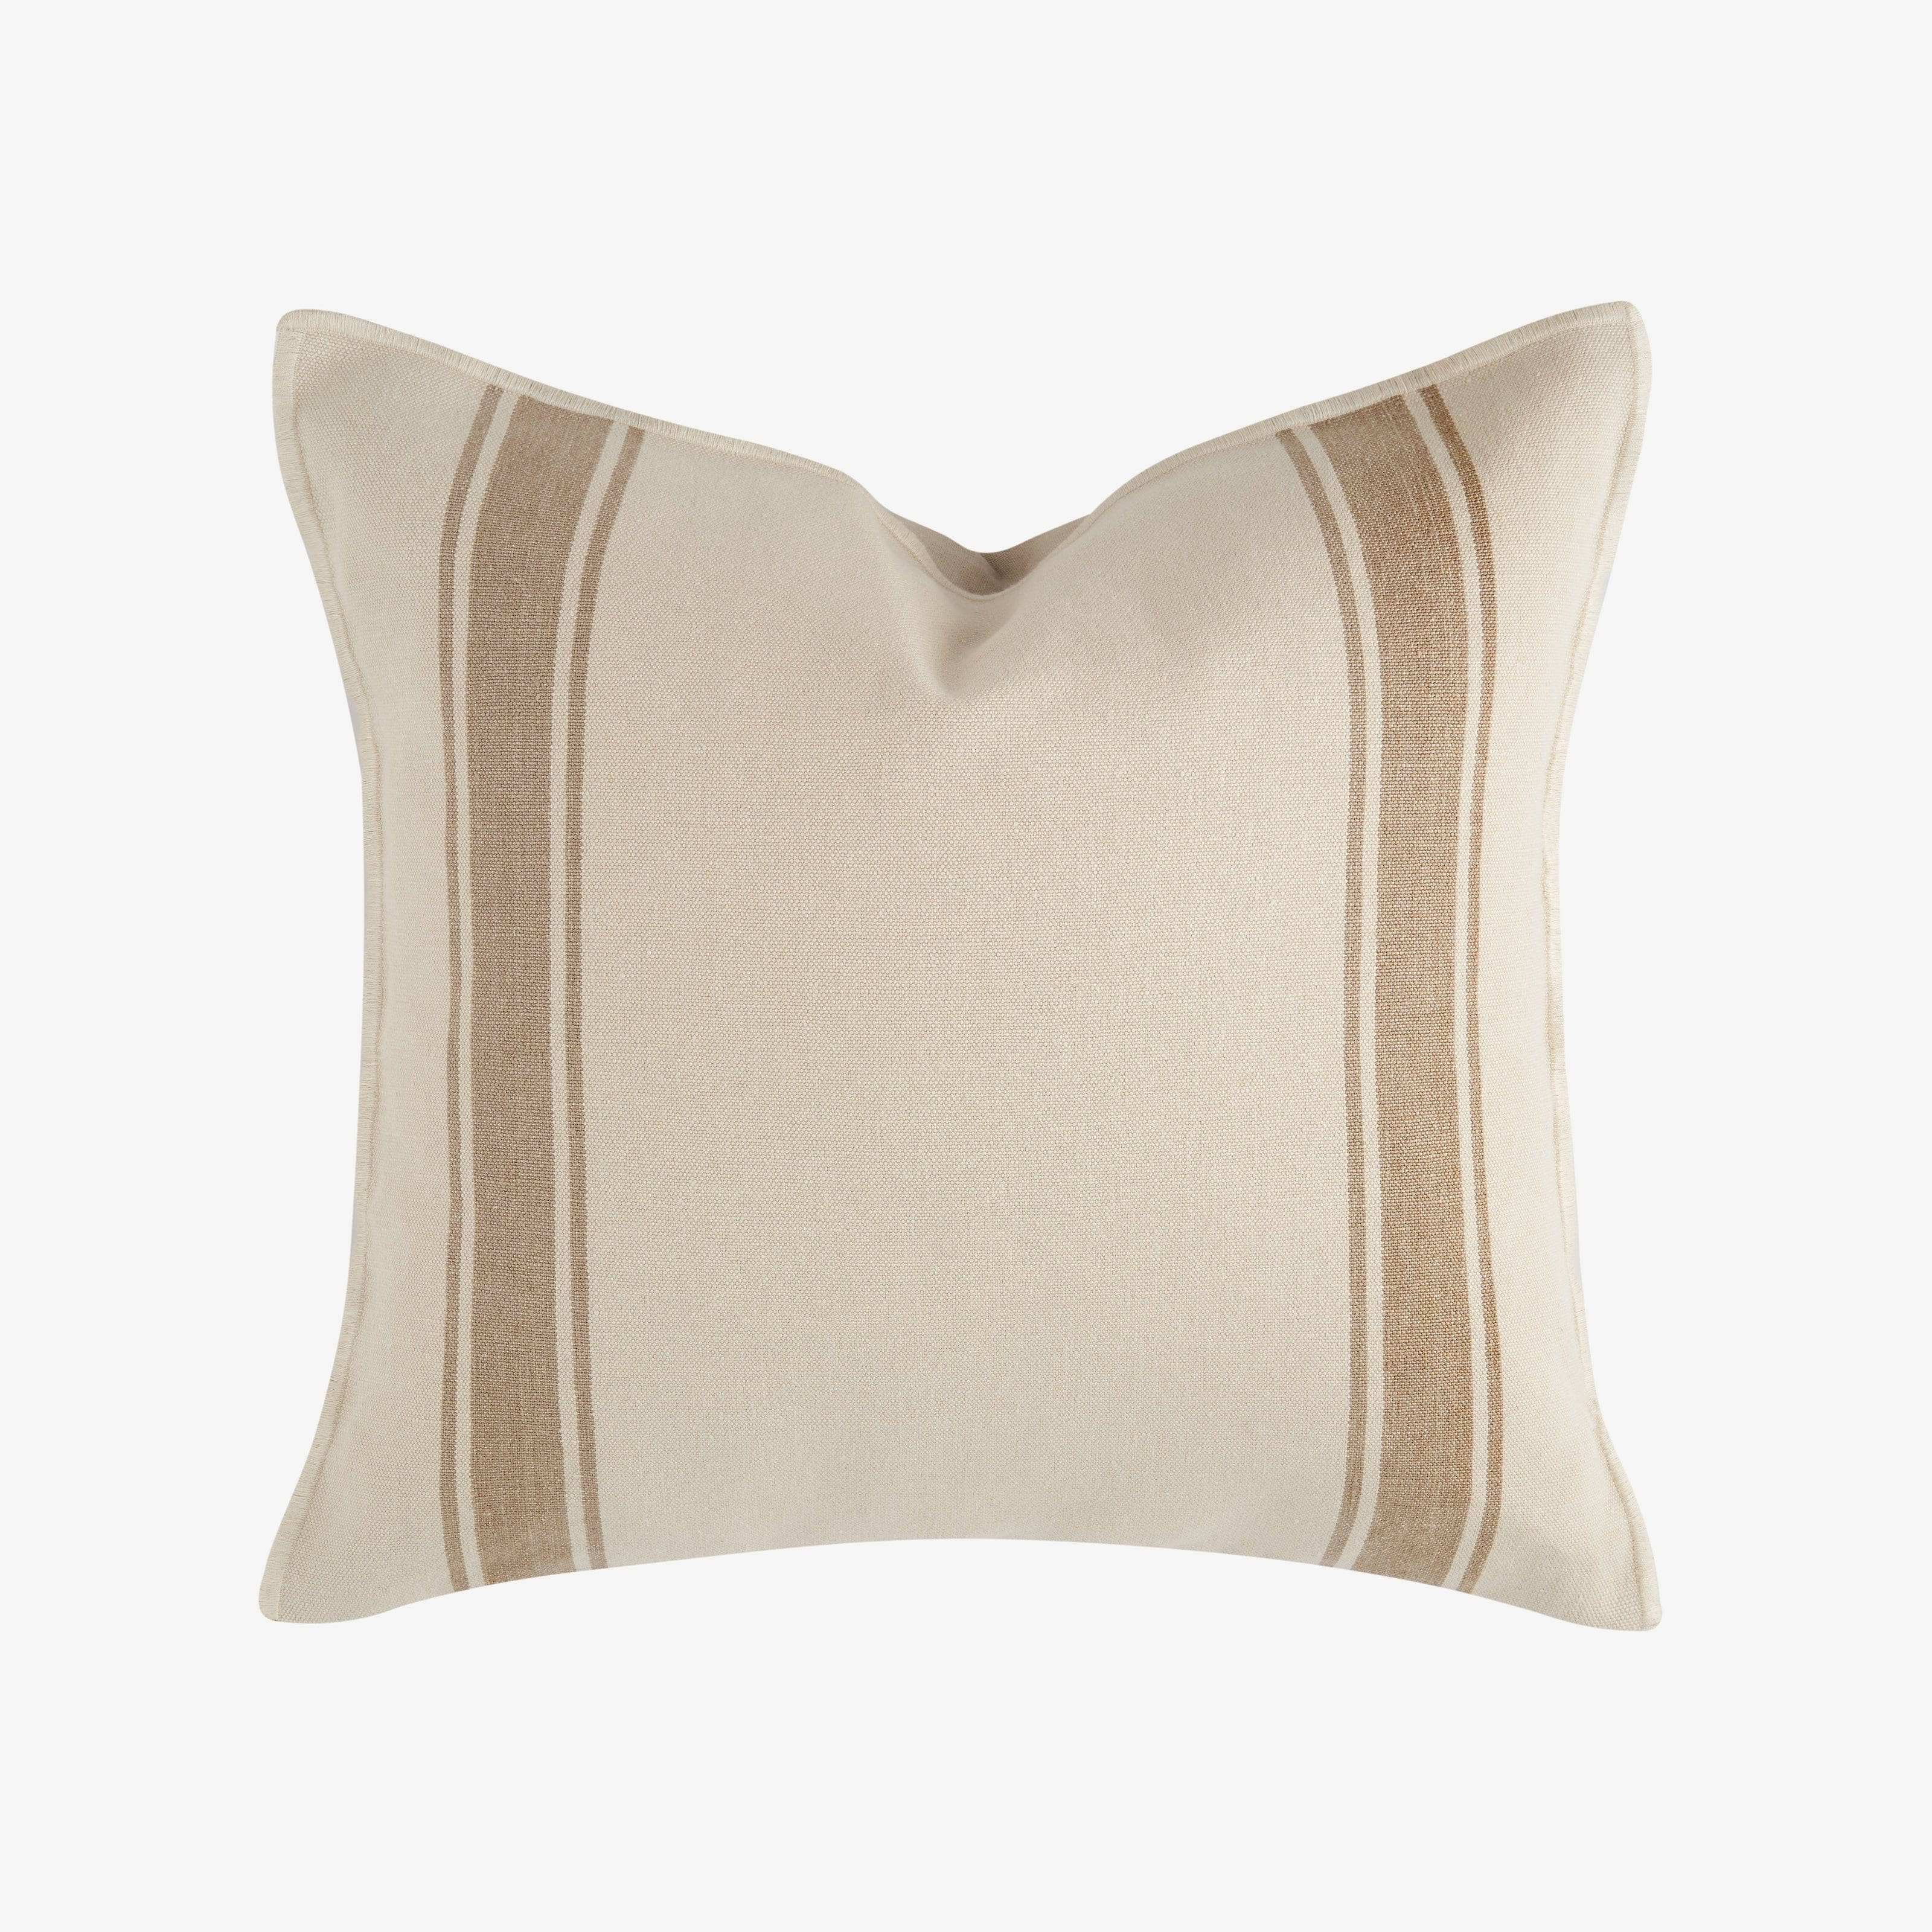 Lido Striped Linen Cushion Cover, Natural - Beige, 45x45 cm - 3